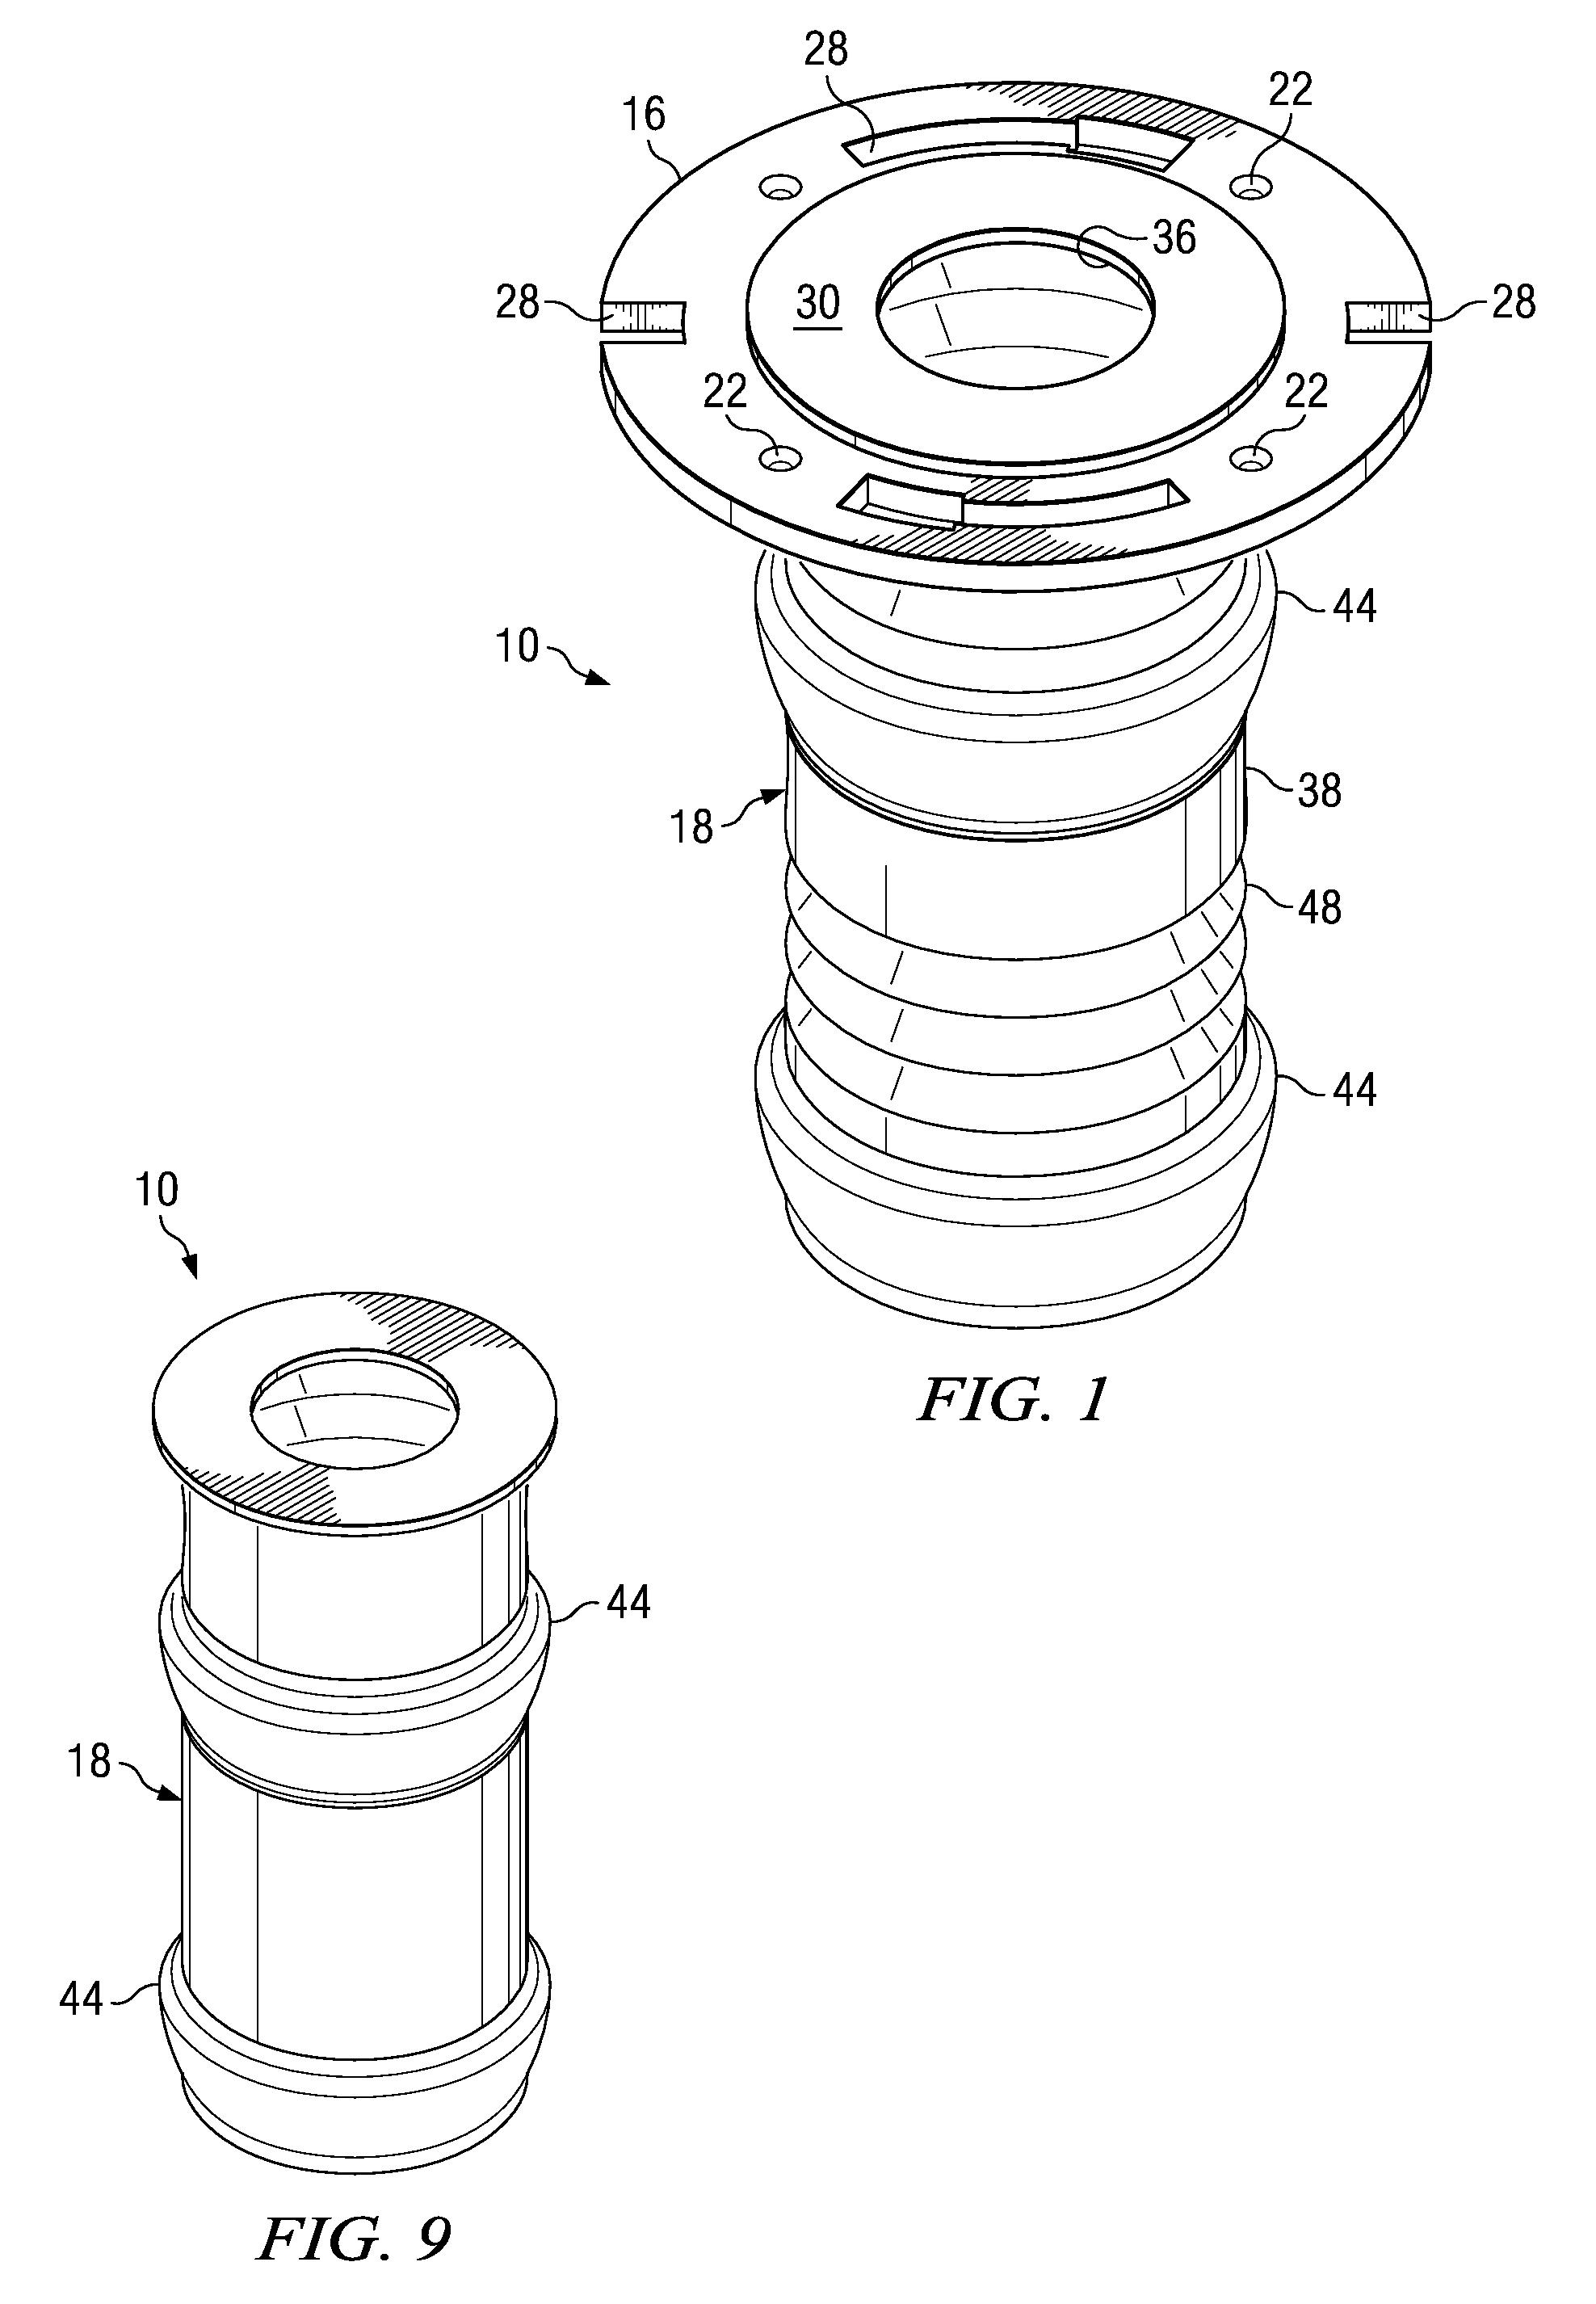 Flexible flange apparatus with a flexible membrane